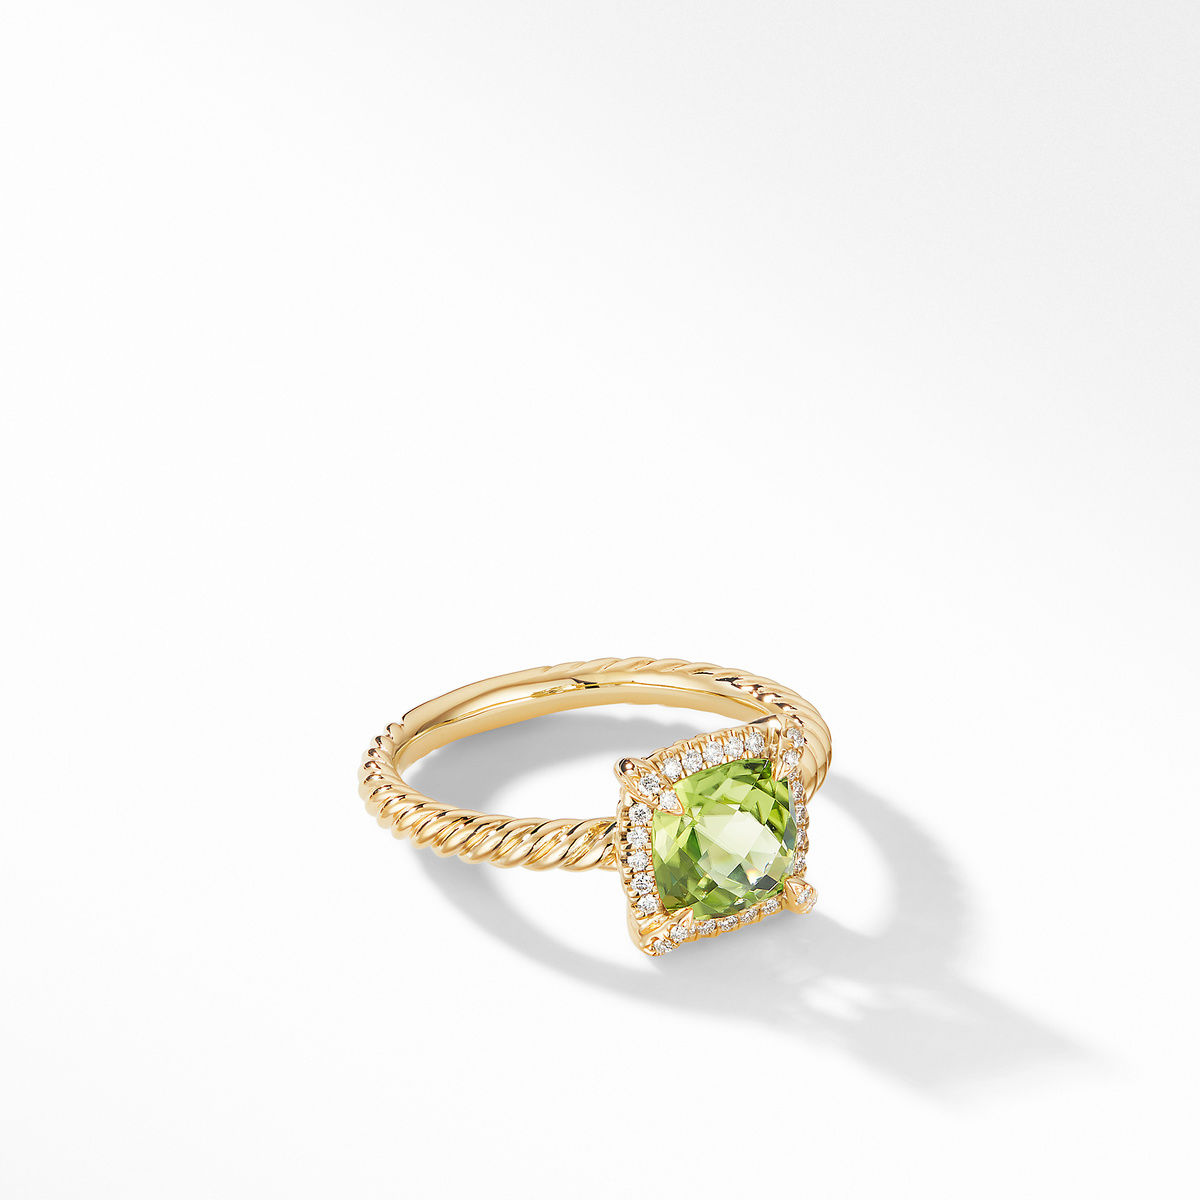 David Yurman Petite Chatelaine Pave Bezel Ring in 18K Yellow Gold with Peridot and Diamonds - Size 5.5